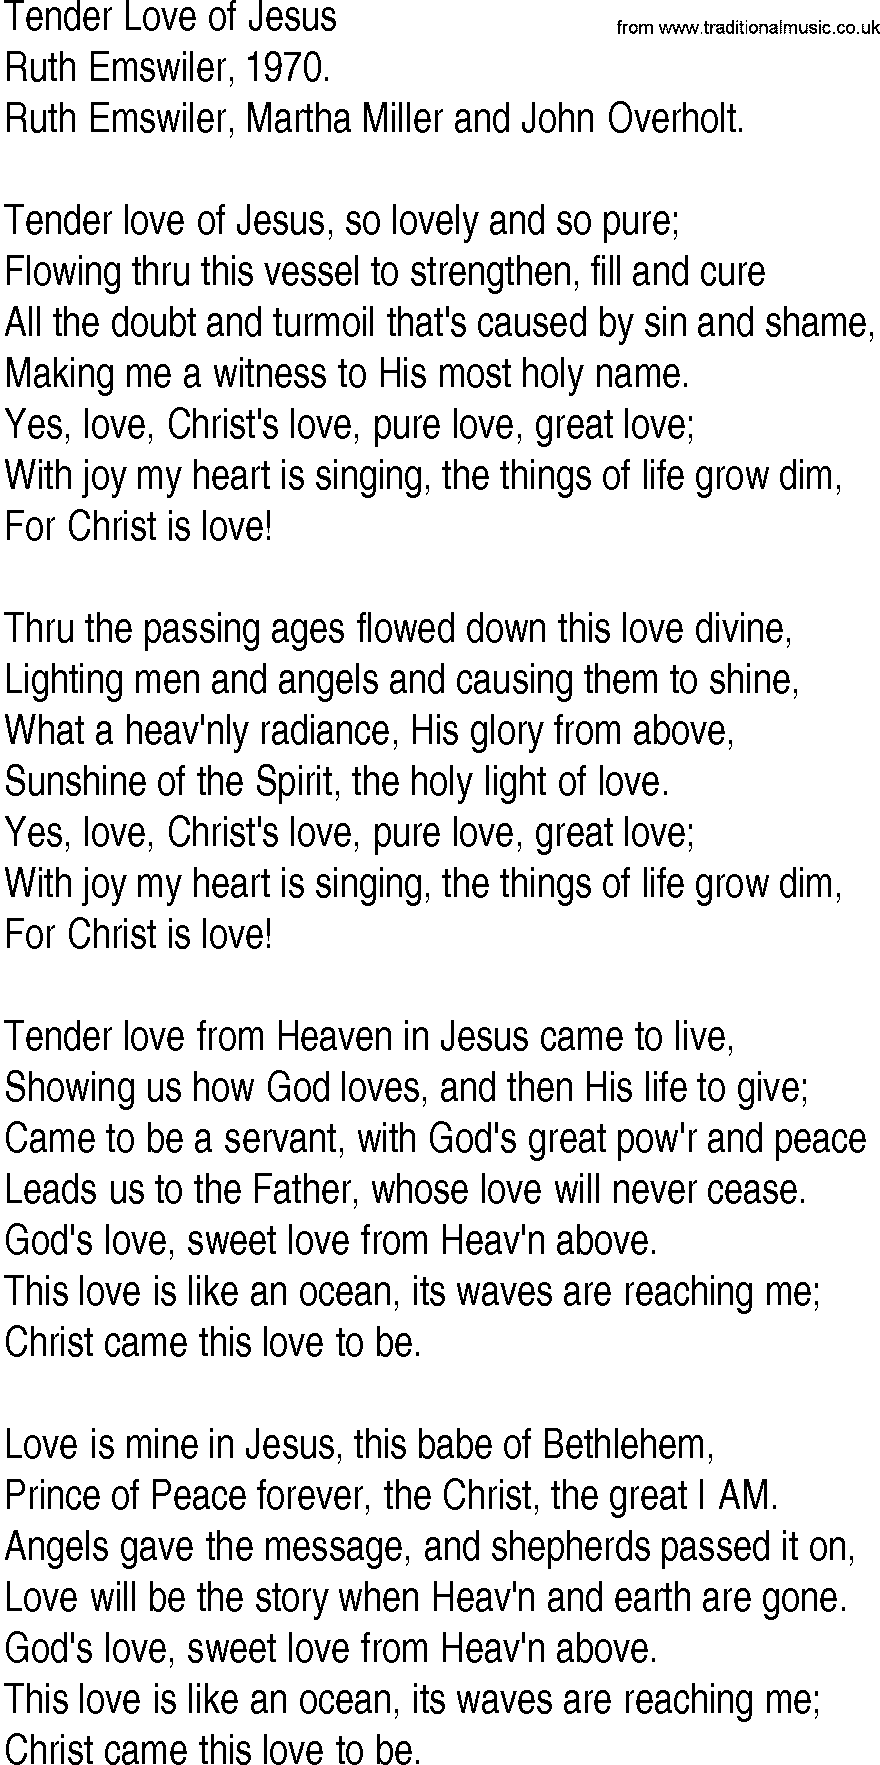 Hymn and Gospel Song: Tender Love of Jesus by Ruth Emswiler lyrics